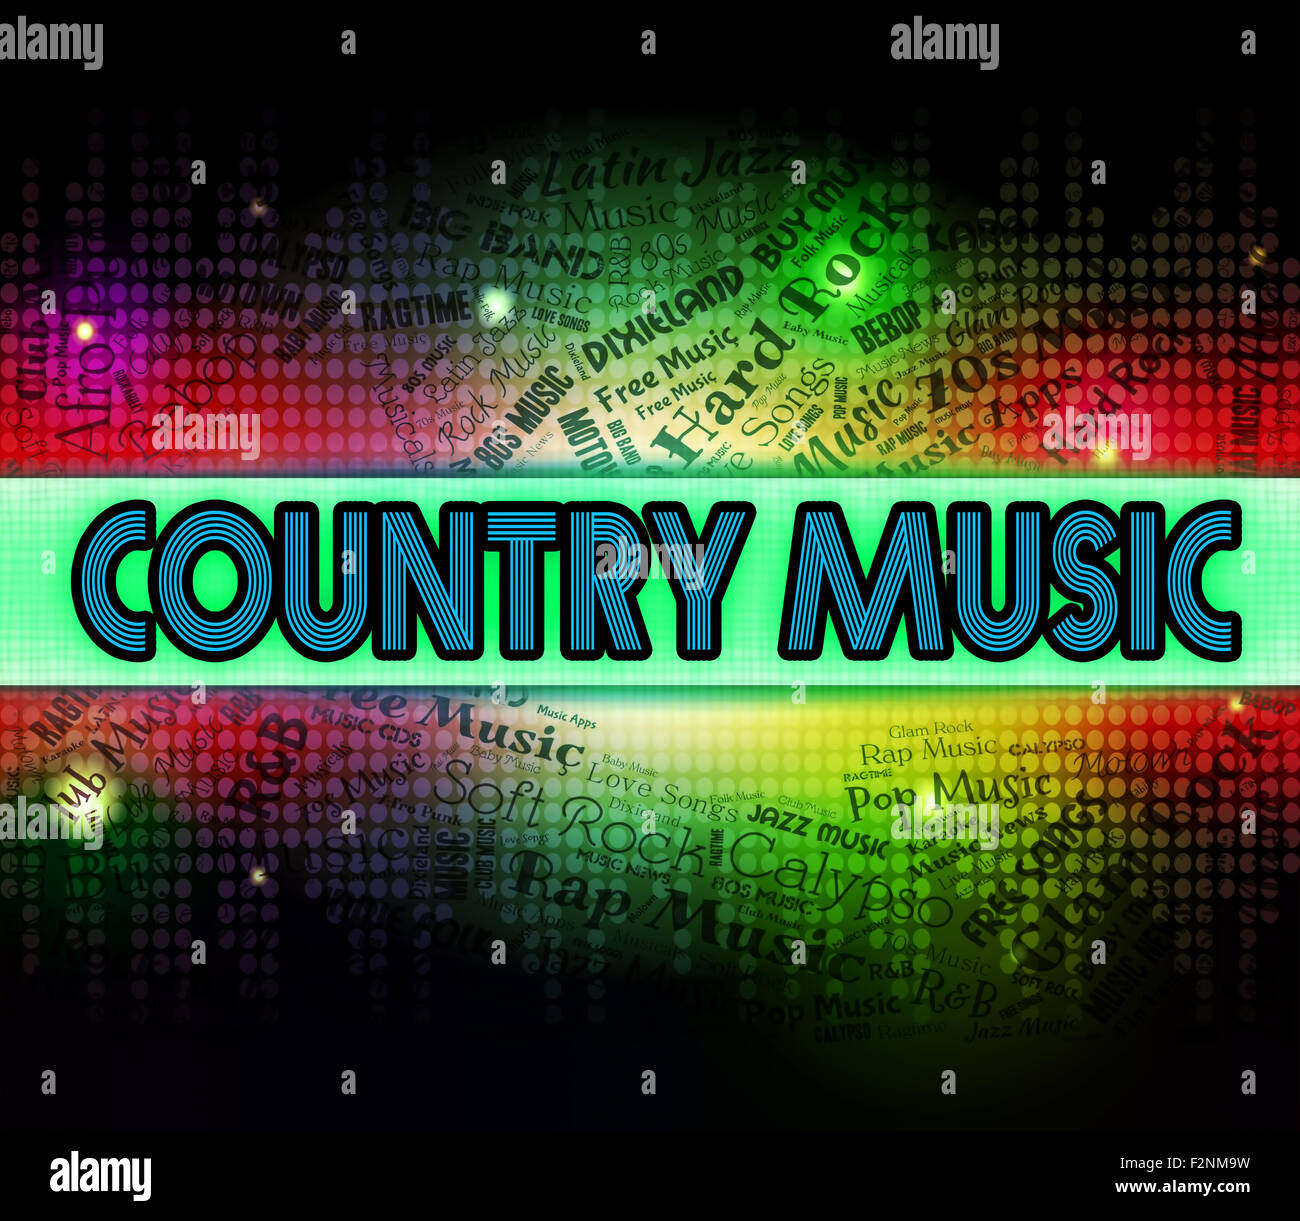 Country-Musik mit Sound-Tracks und Songs Stockfoto